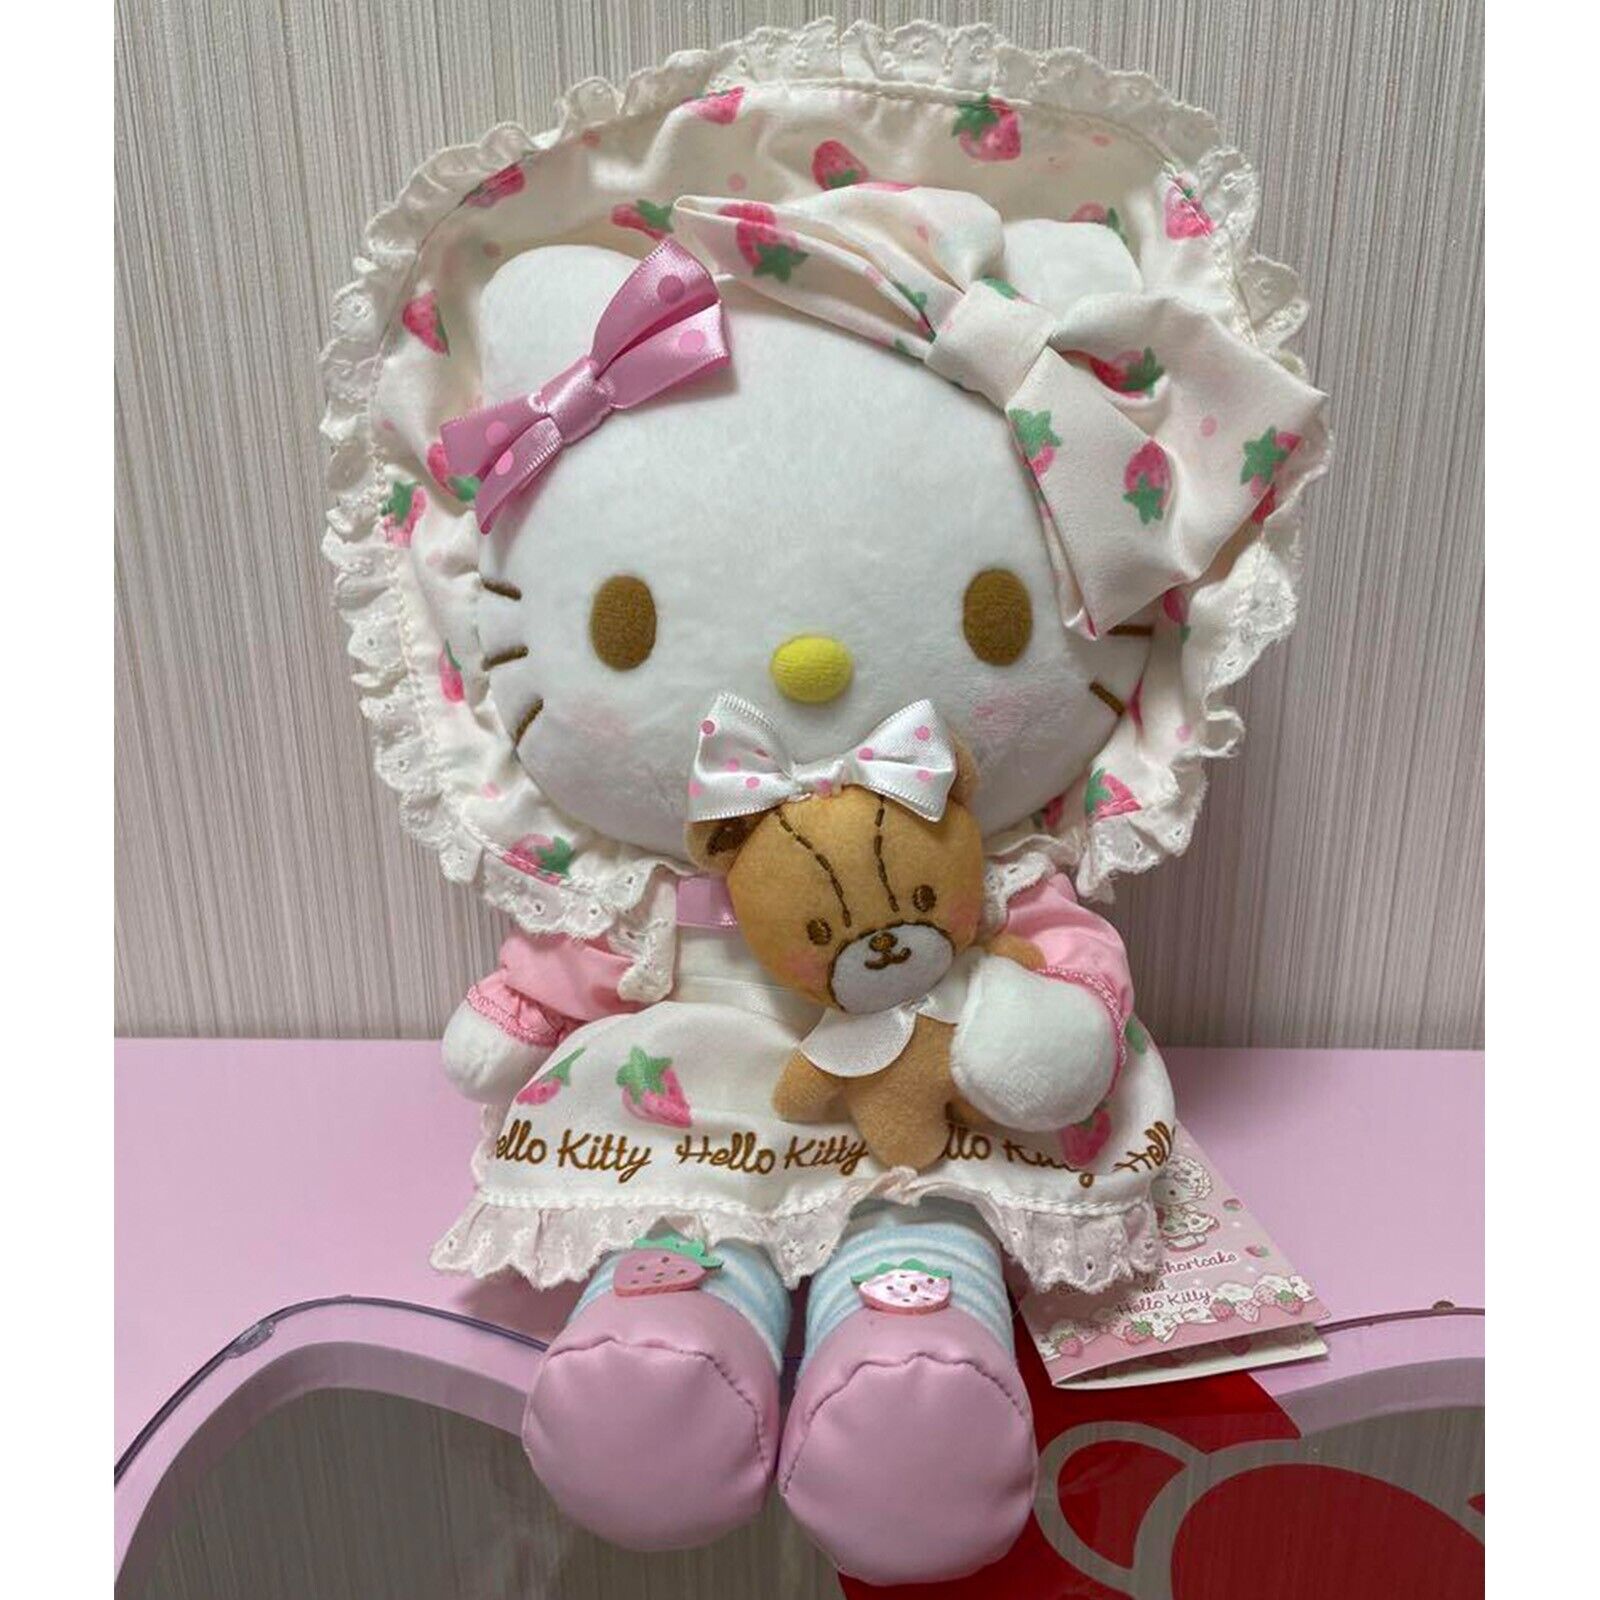 Sanrio Original Hello Kitty Strawberry Shortcake Stuffed Plush Doll 2017 New